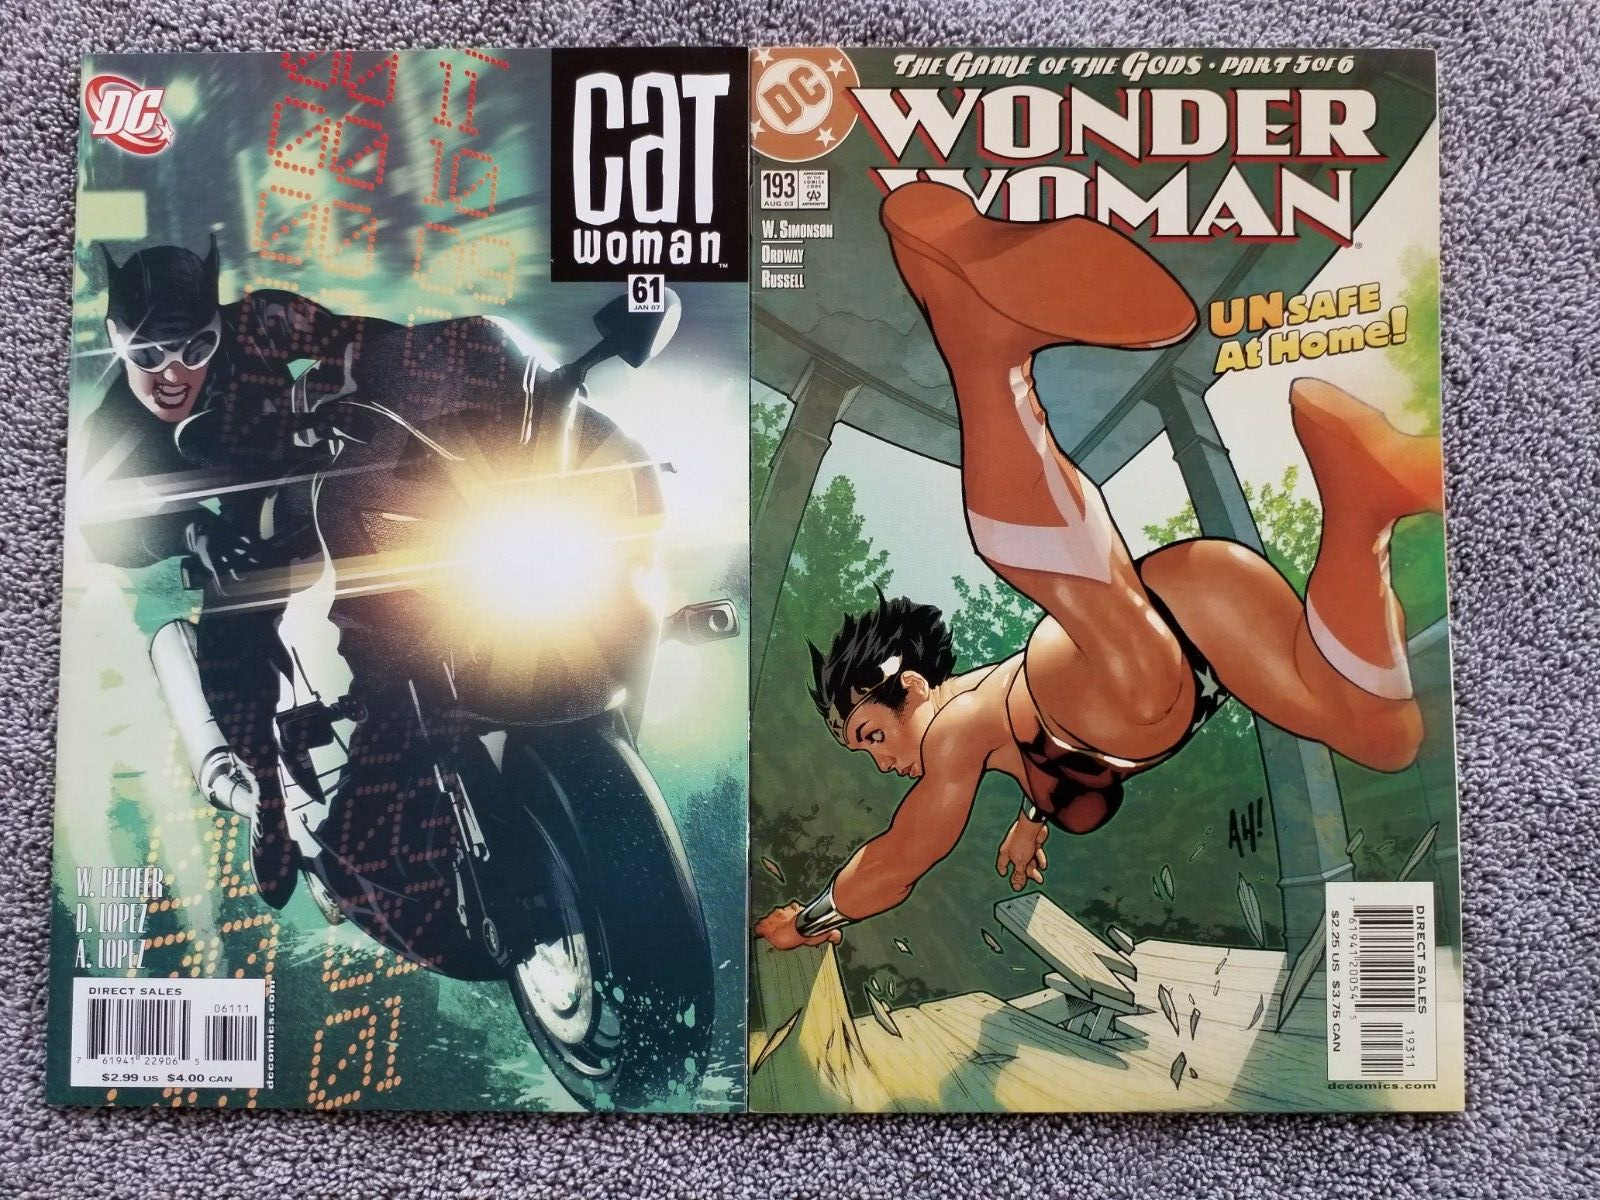 Wonder Woman 193 194 195, Catwoman 61 Adam Hughes Covers